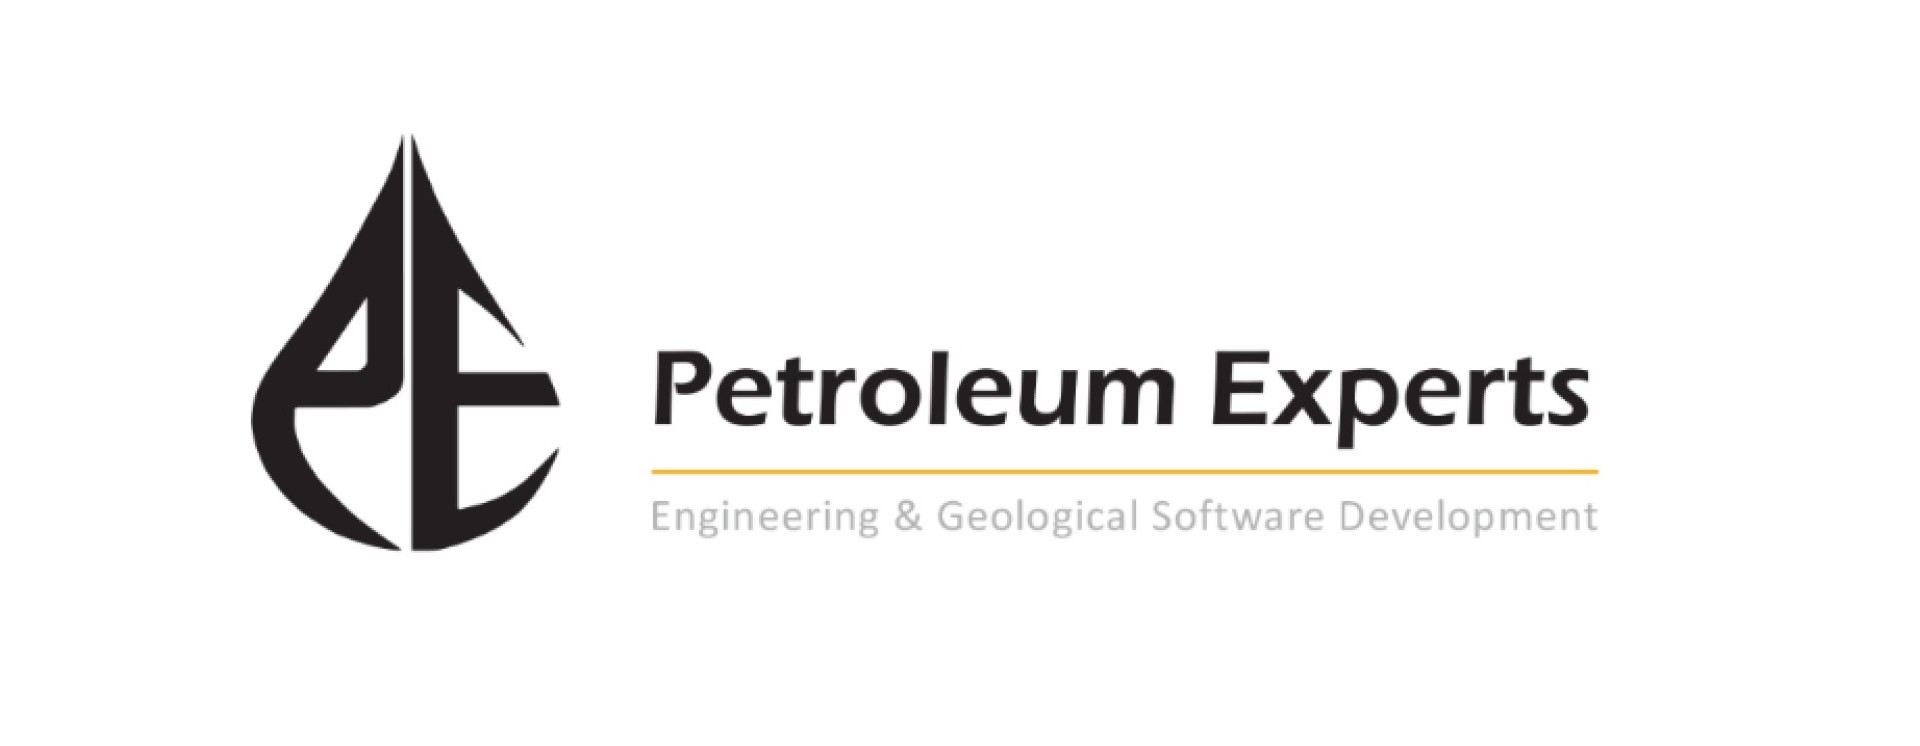 Petroleum Experts logo